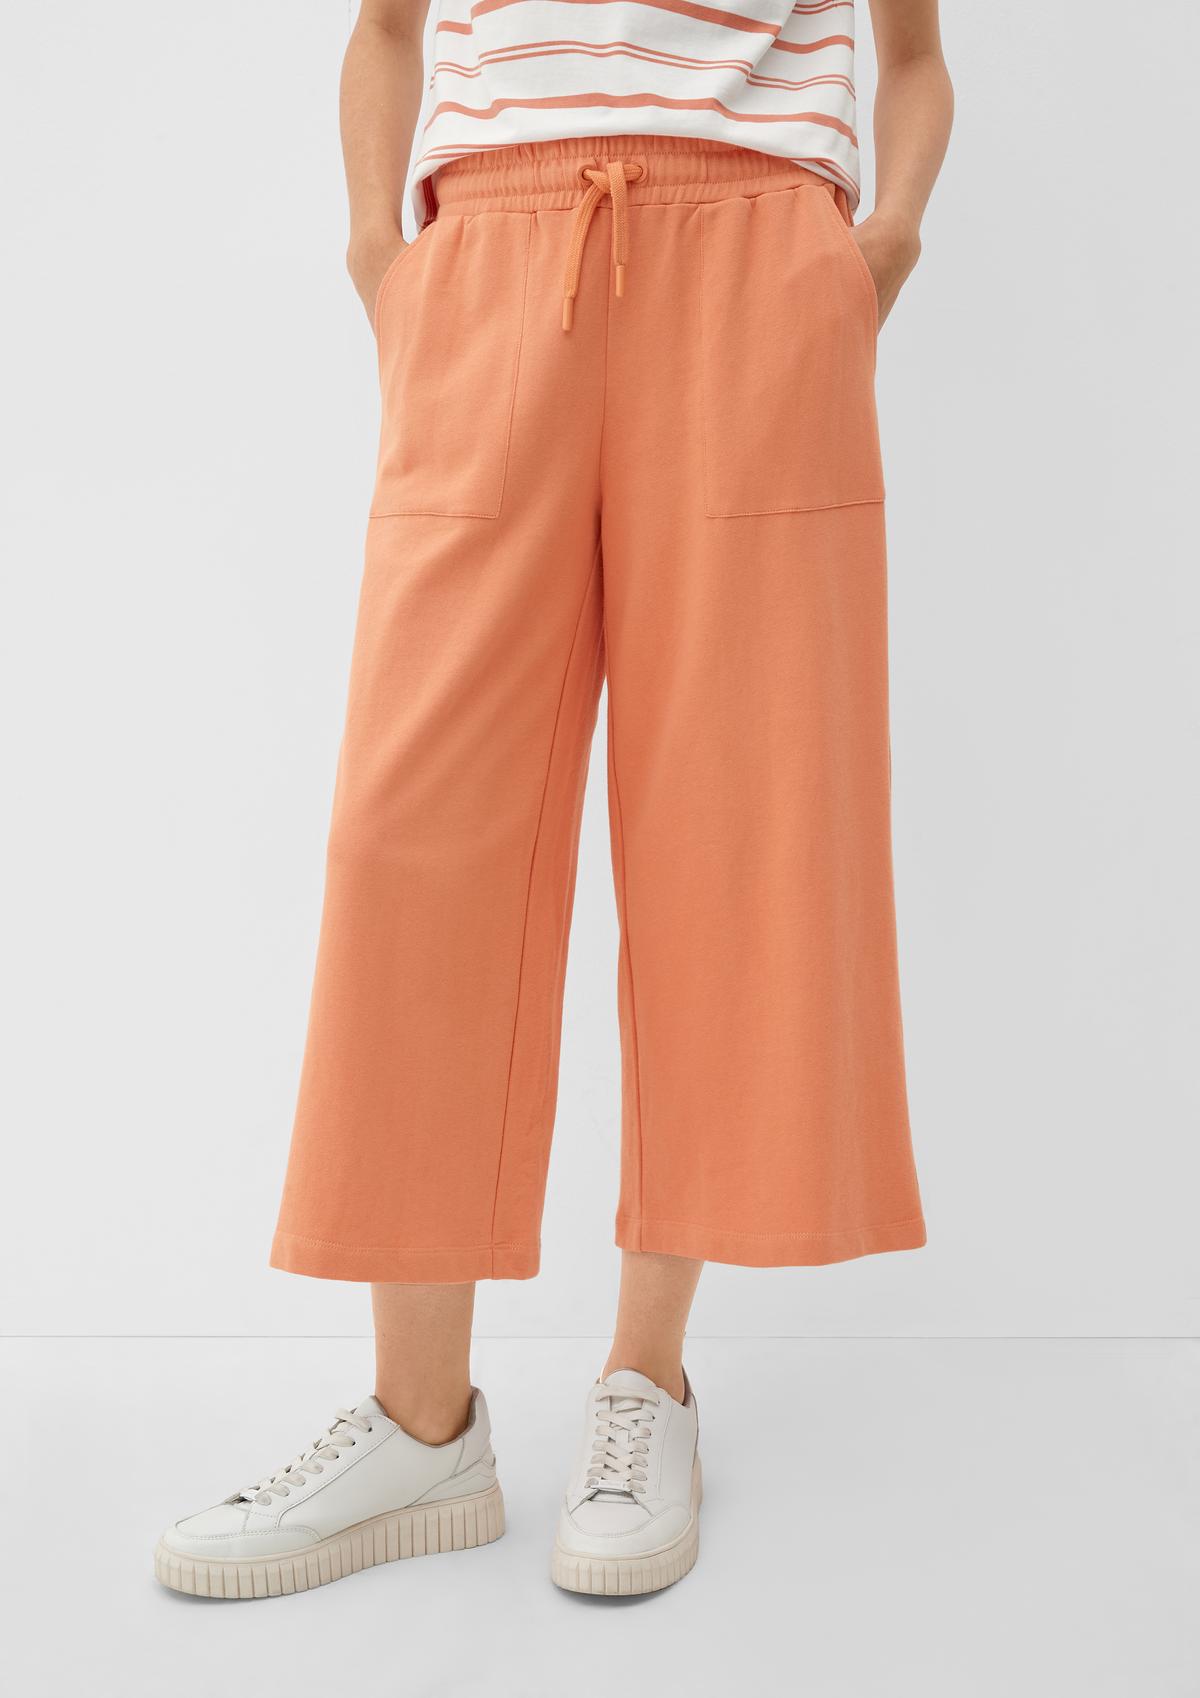 orange pleated cotton culottes pants